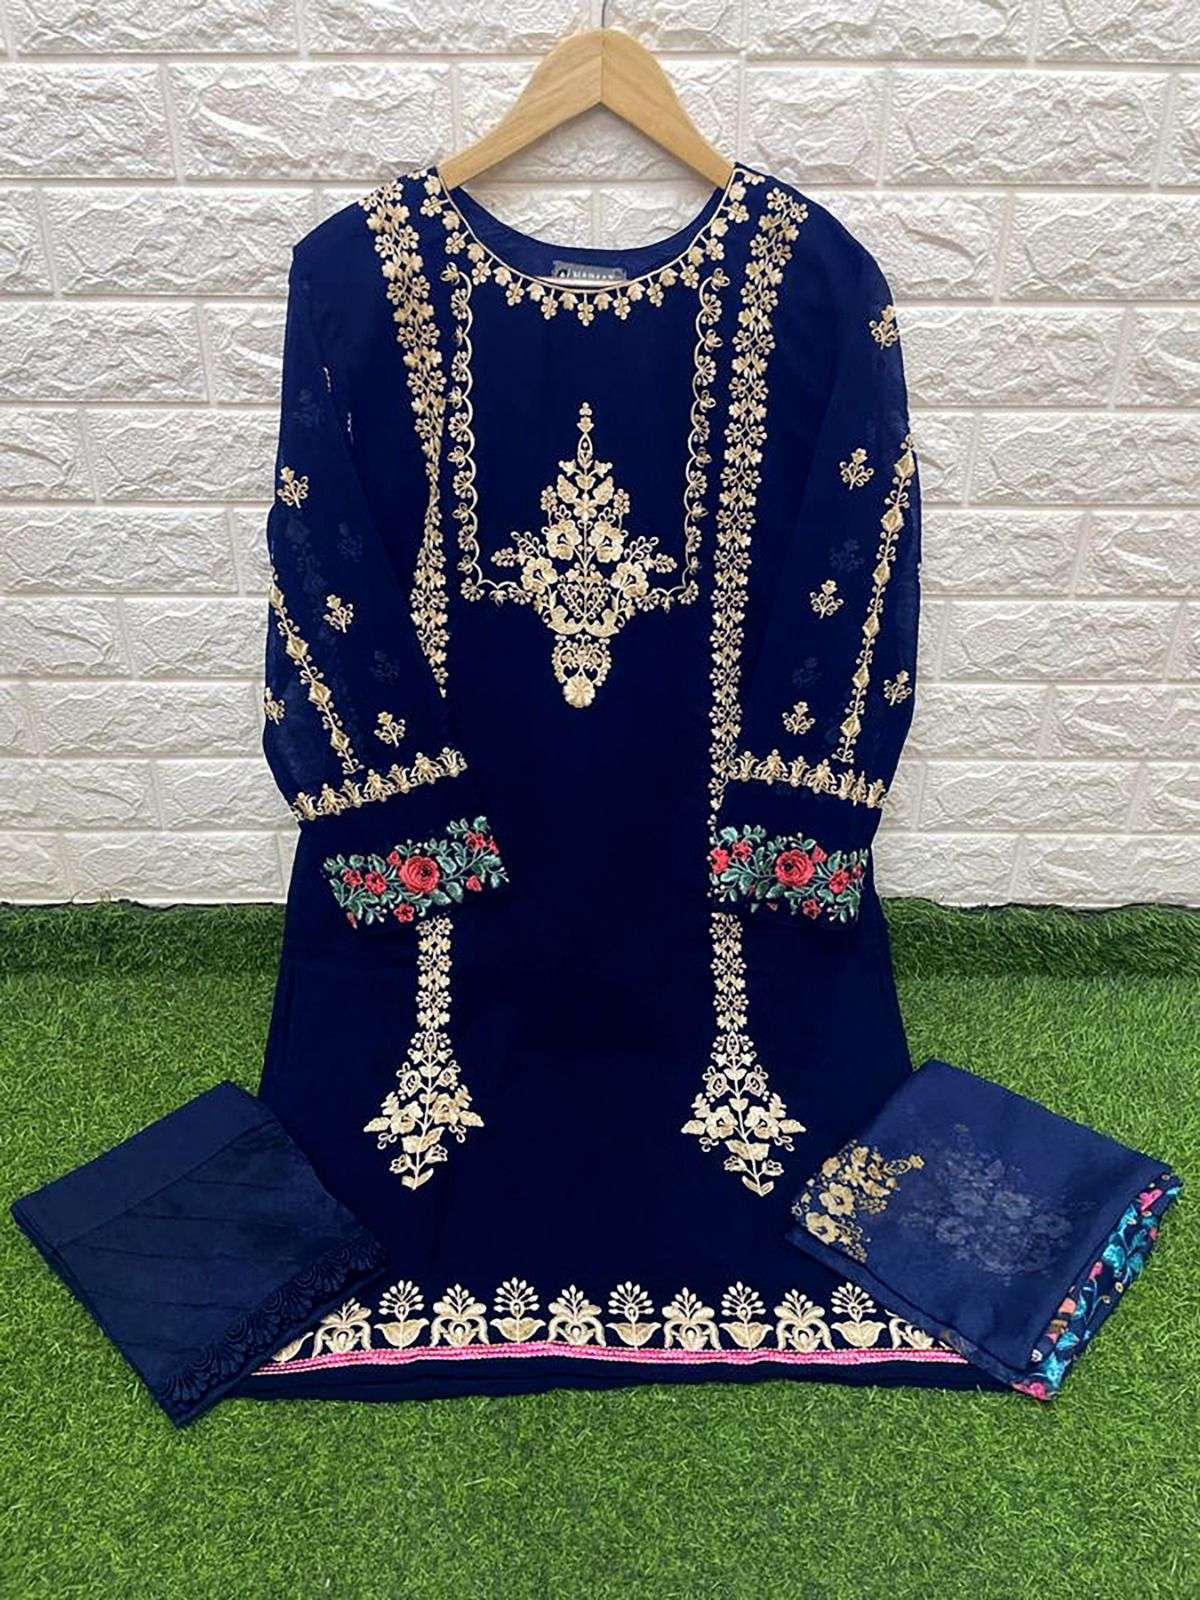 naimat fashion studio 1062 series festive designer readymade salwar suits collection 2023